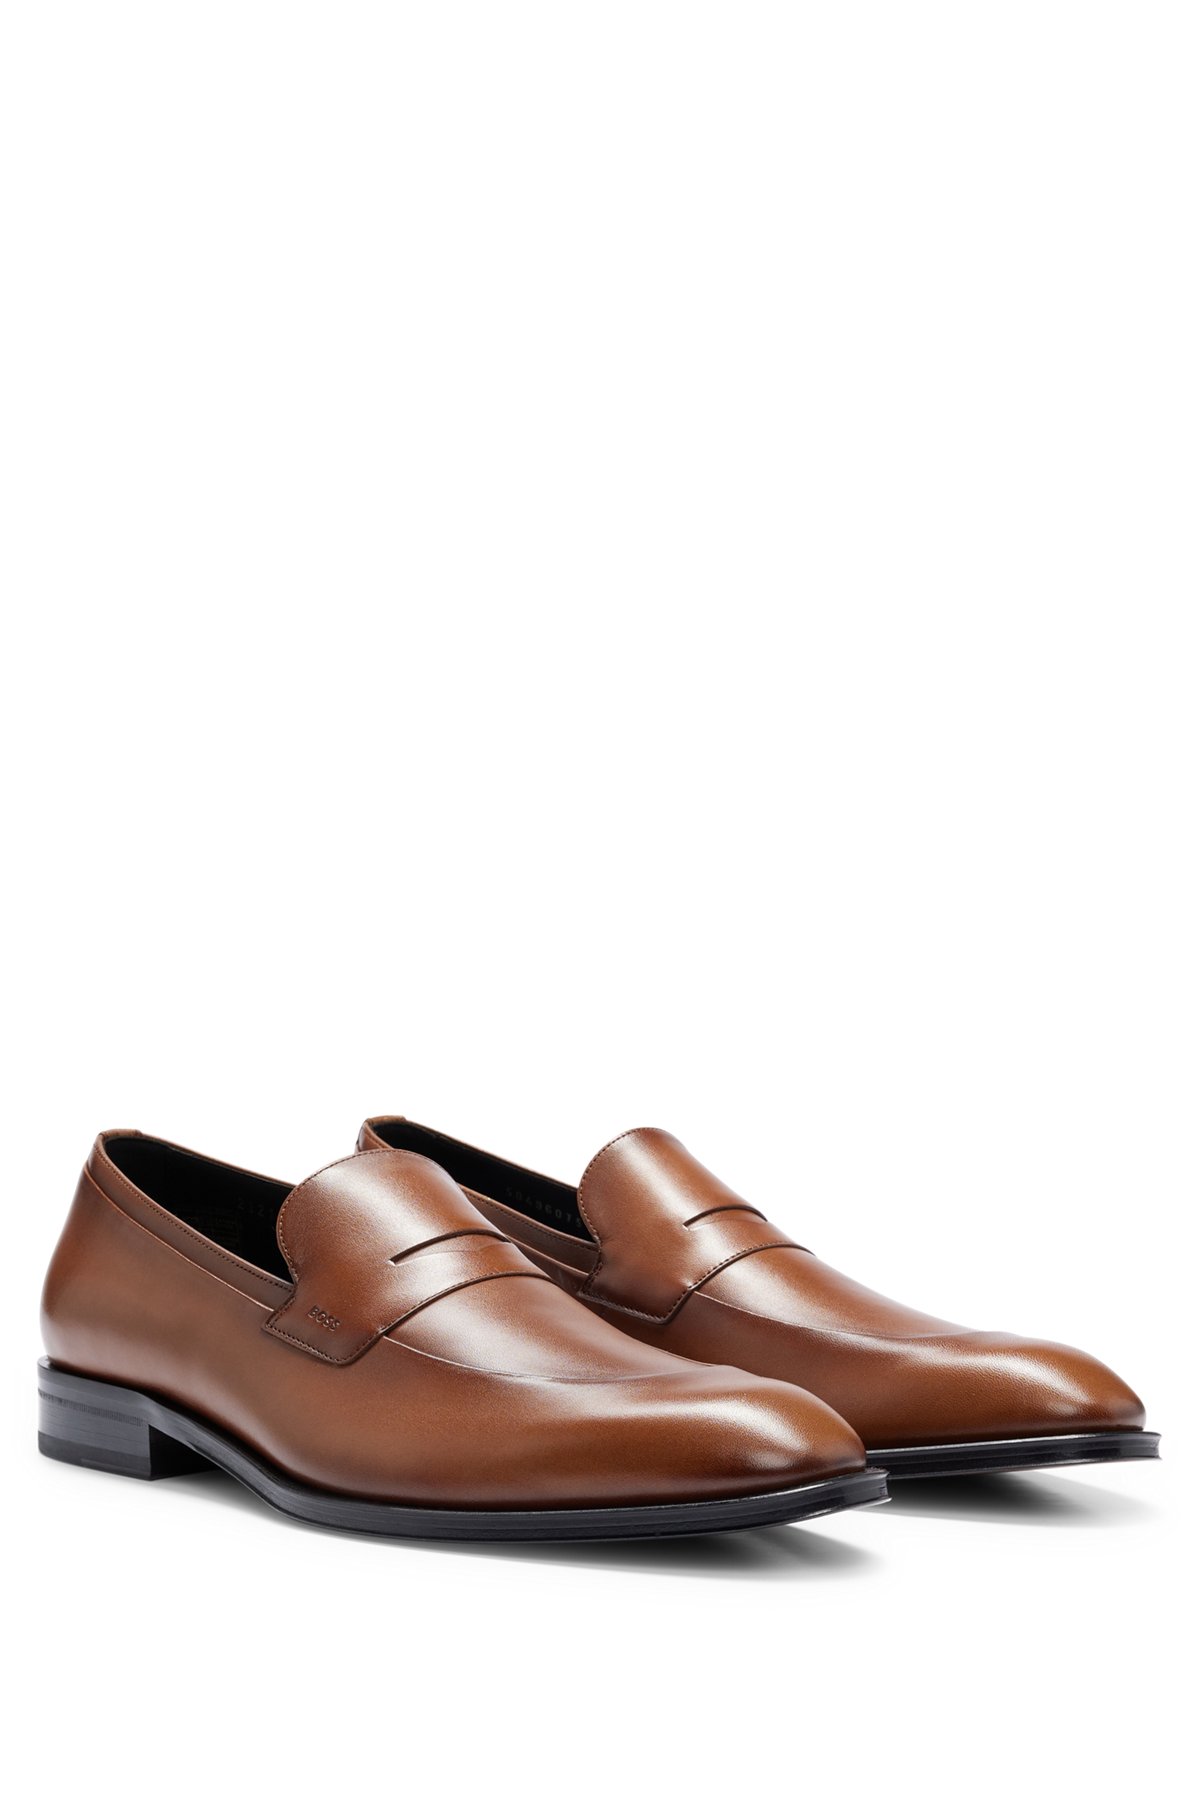 ensom Fejlfri klima BOSS - Italian leather loafers with apron toe and branded trim